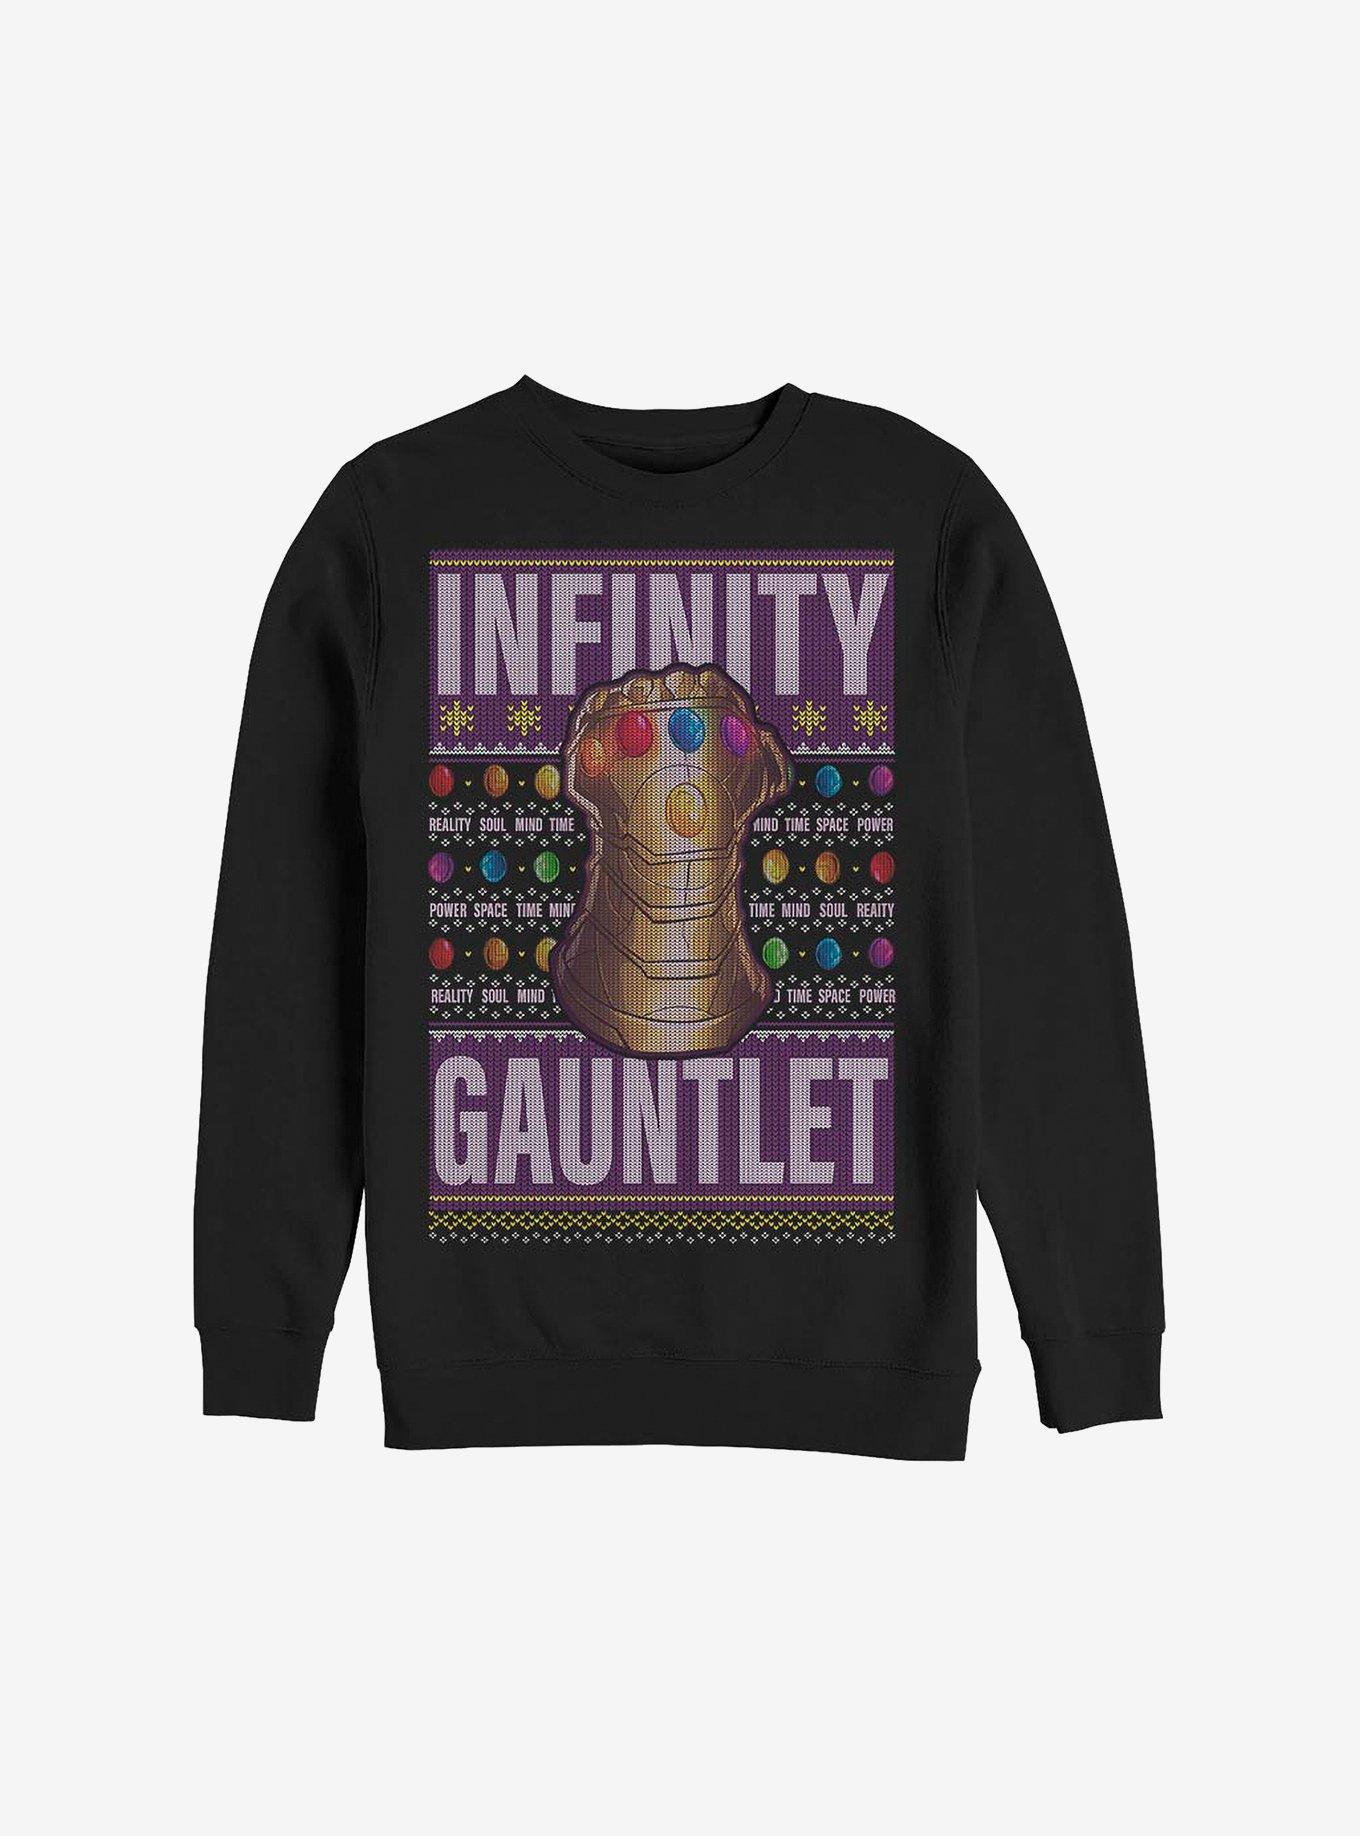 Marvel Avengers Guantlet Sweater Holiday Sweatshirt, BLACK, hi-res